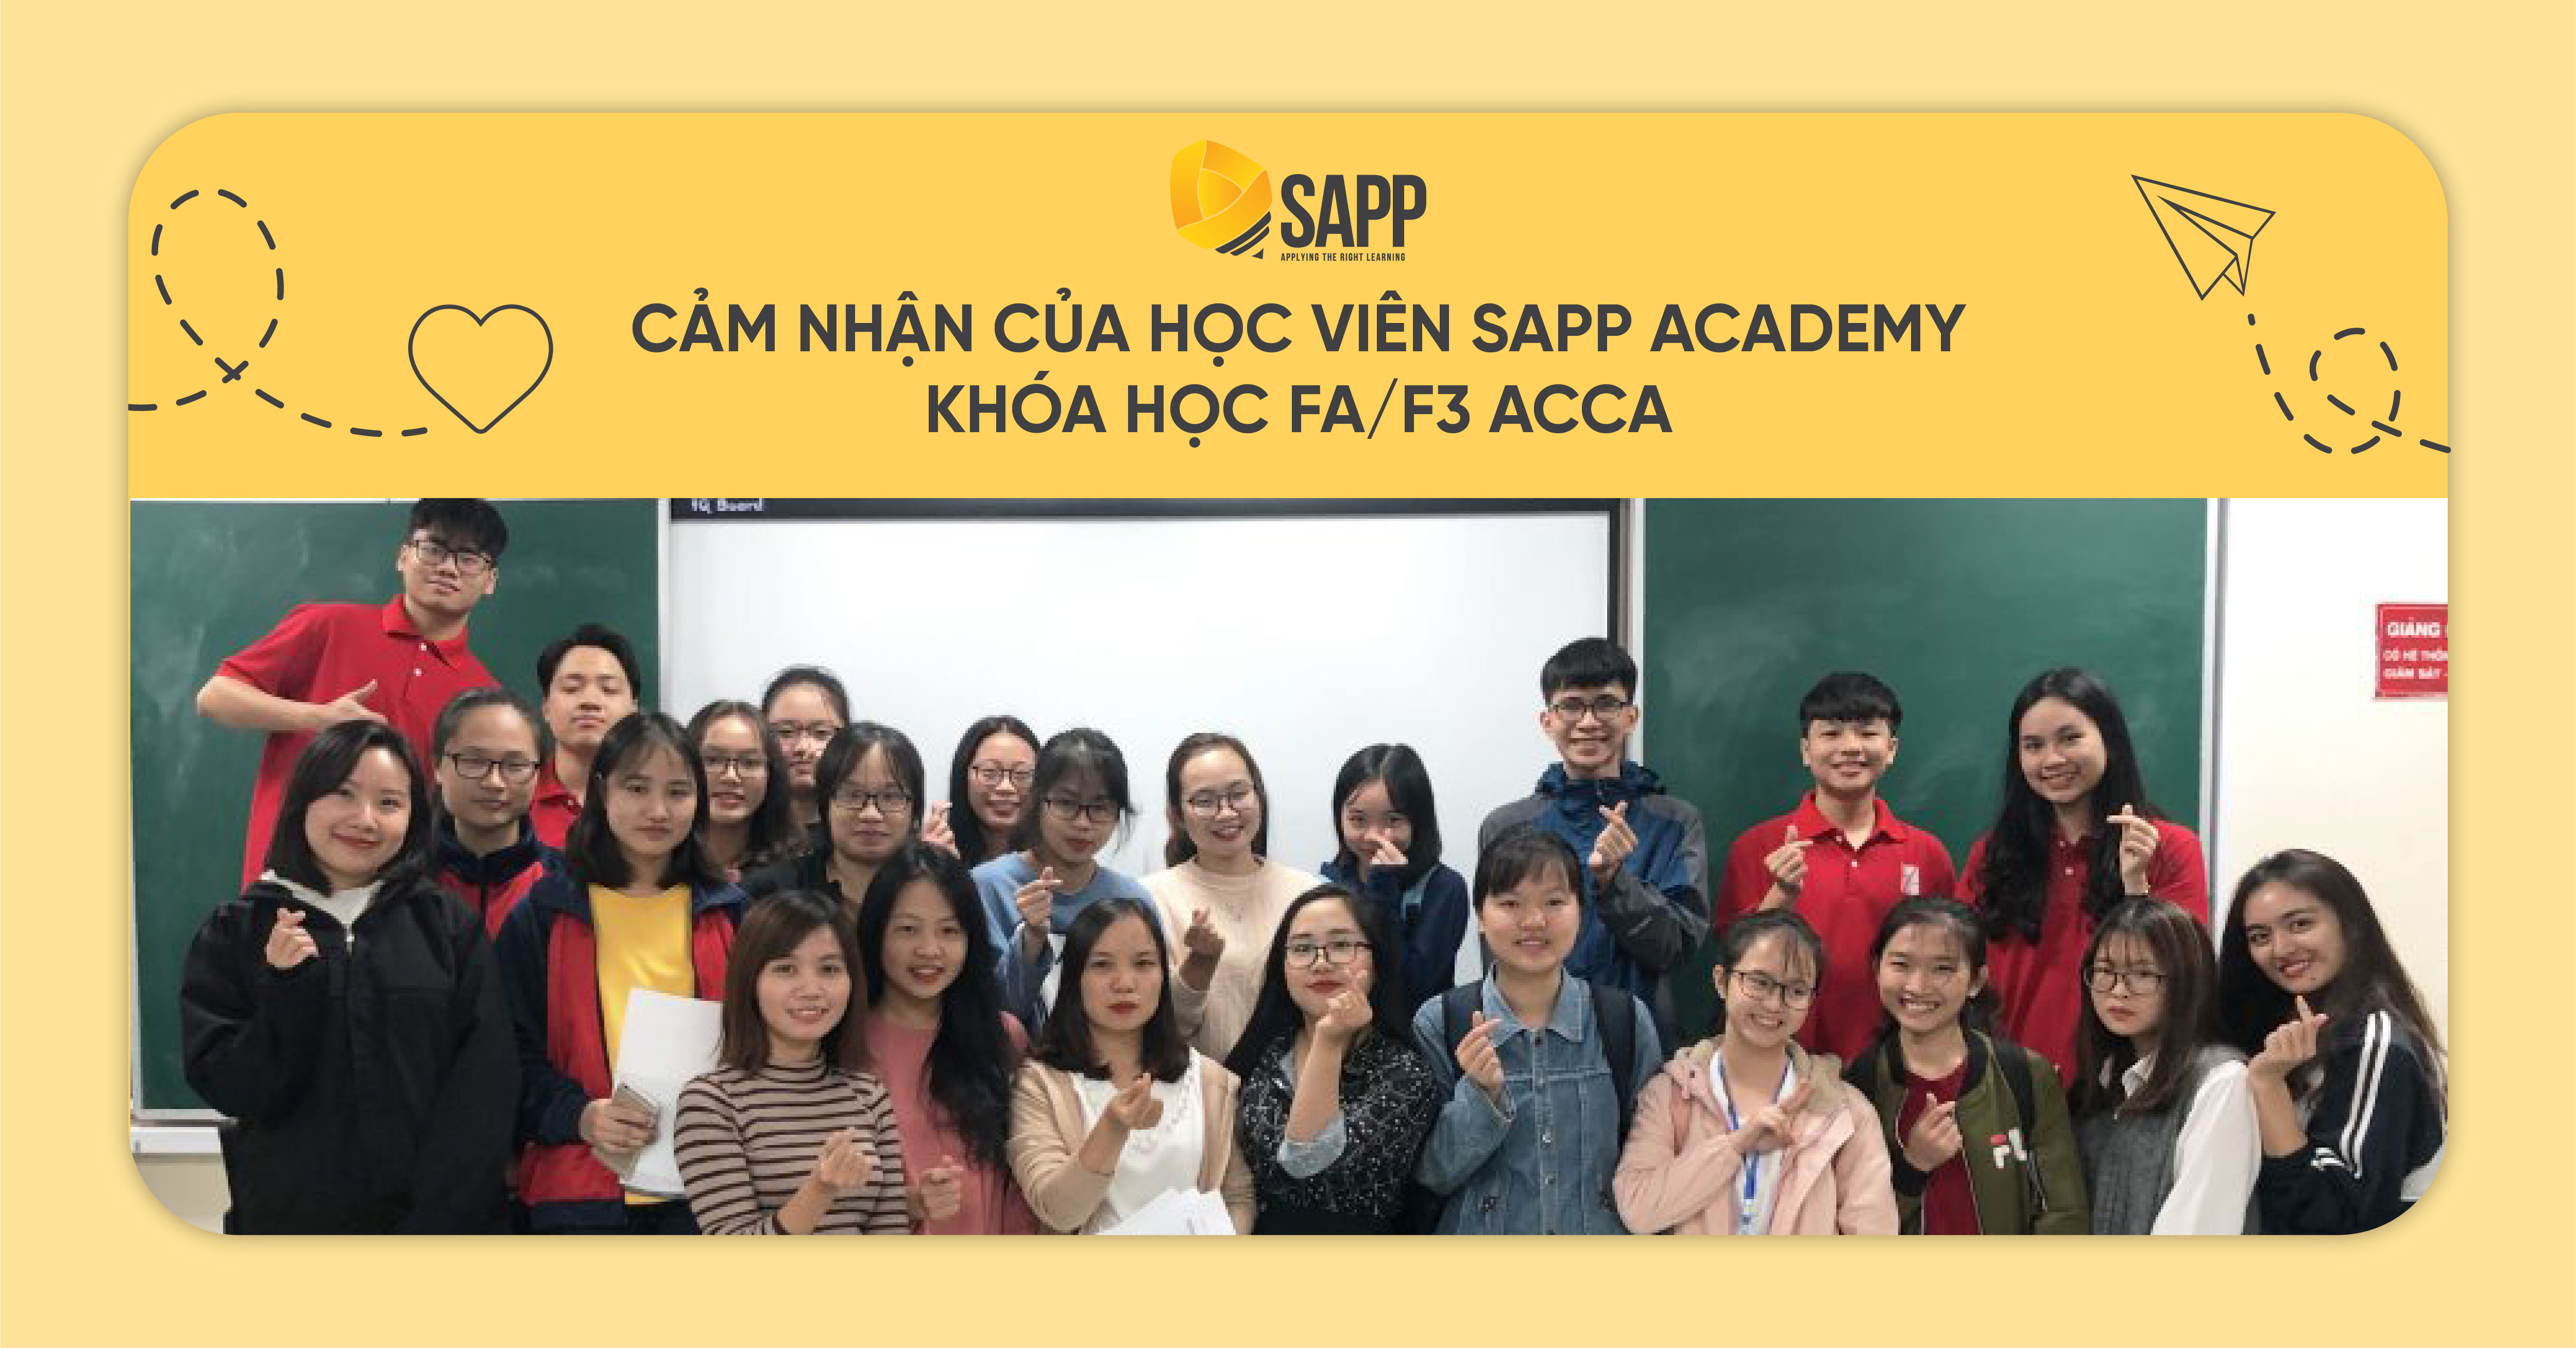 khóa học Financial Accounting (FA F3 ACCA) tại SAPP Academy